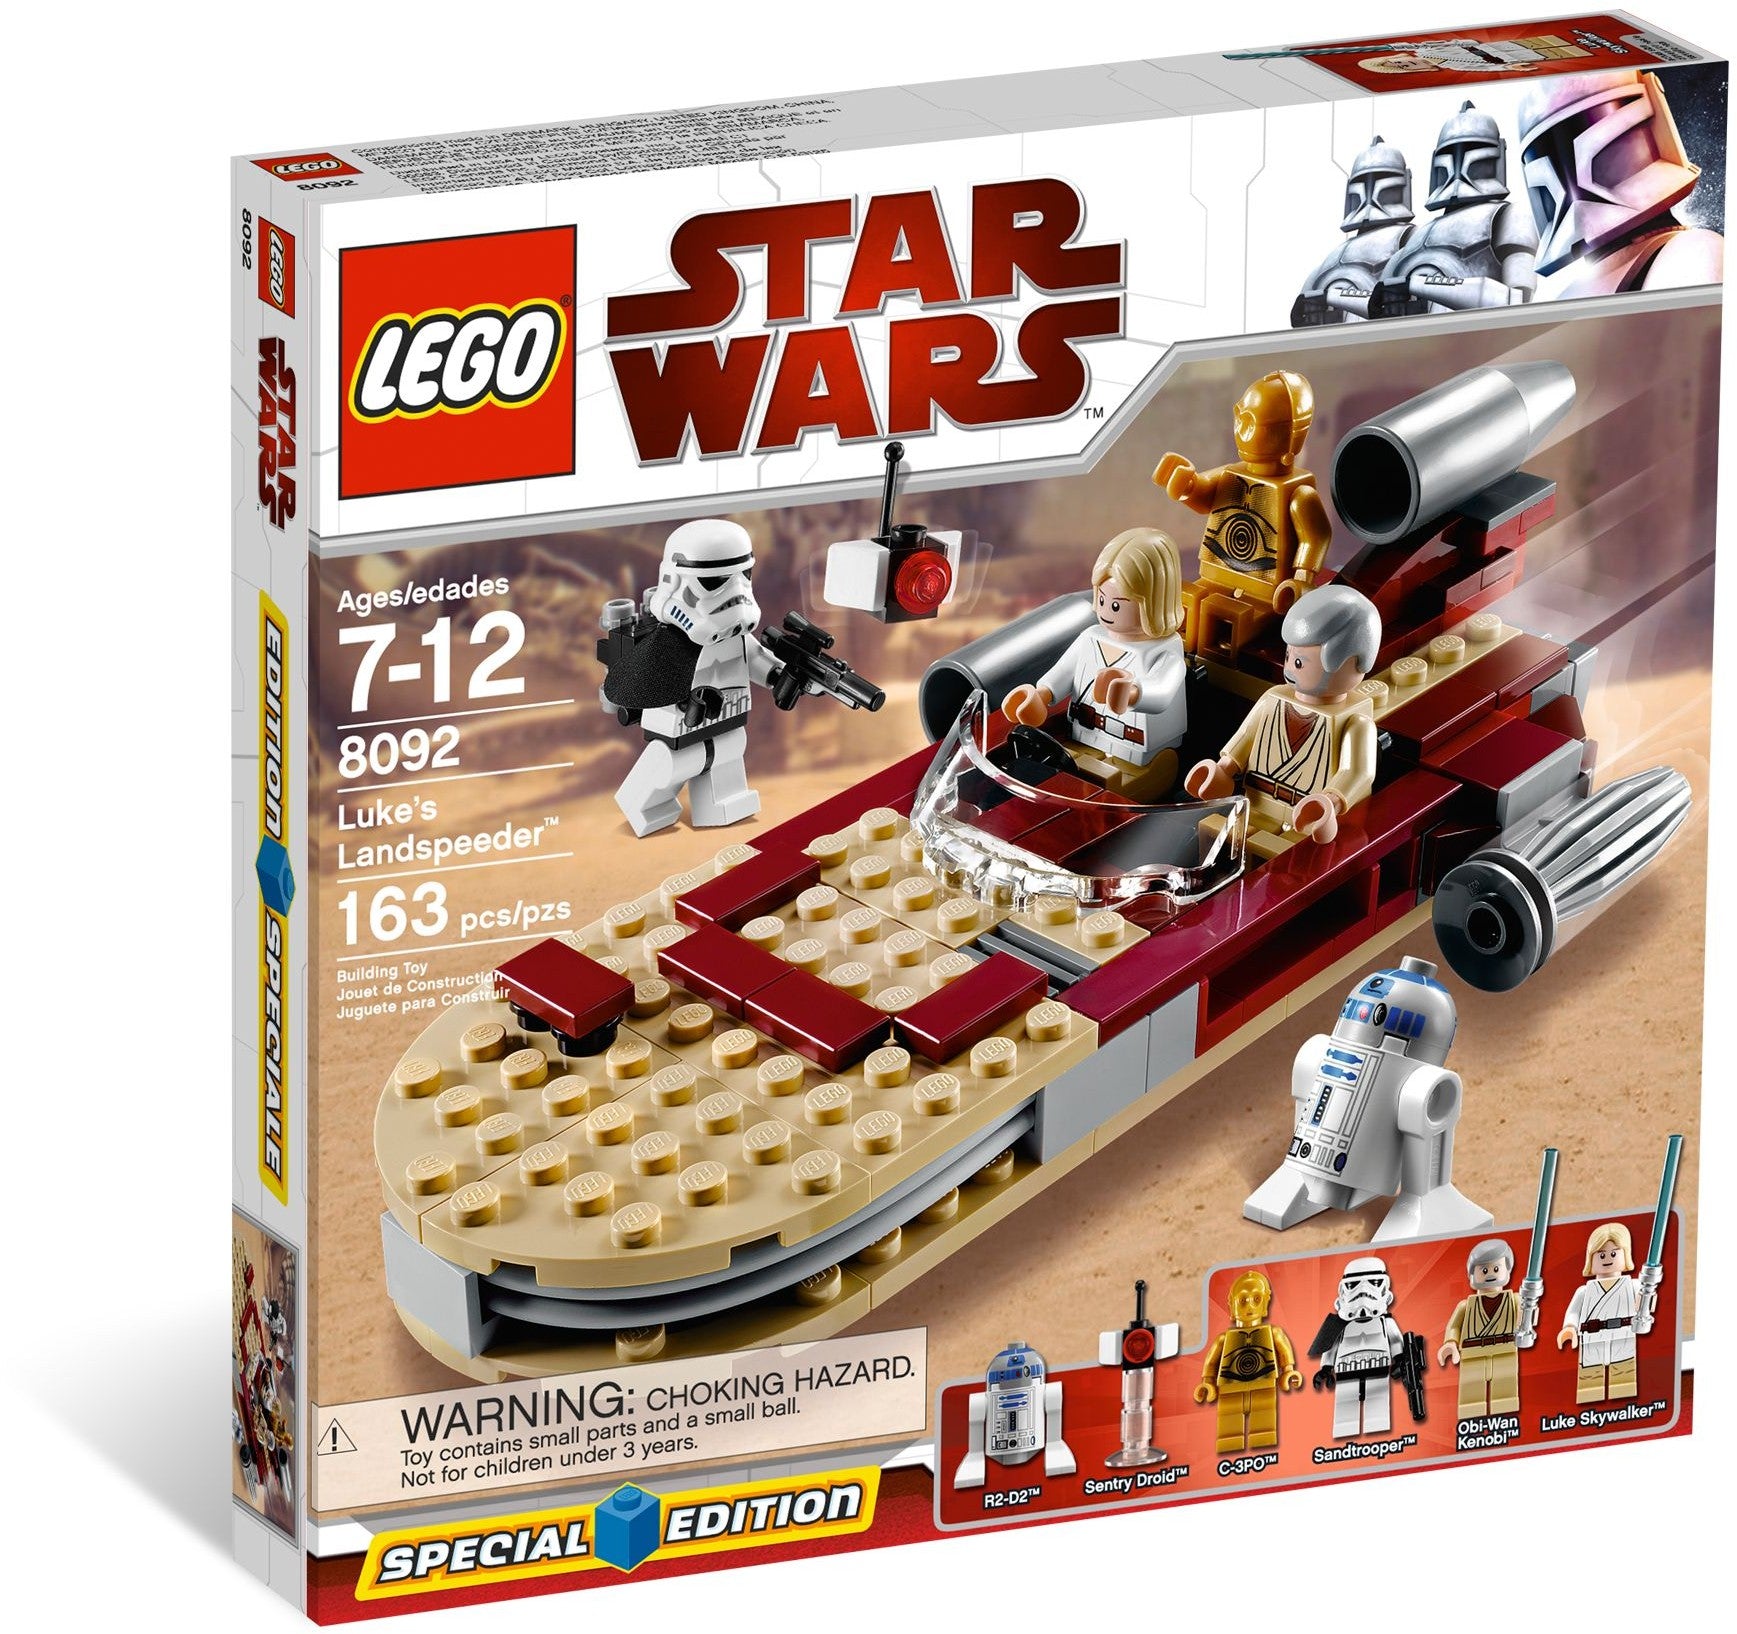 Lego Star Wars 8092 - Luke's Landspeeder